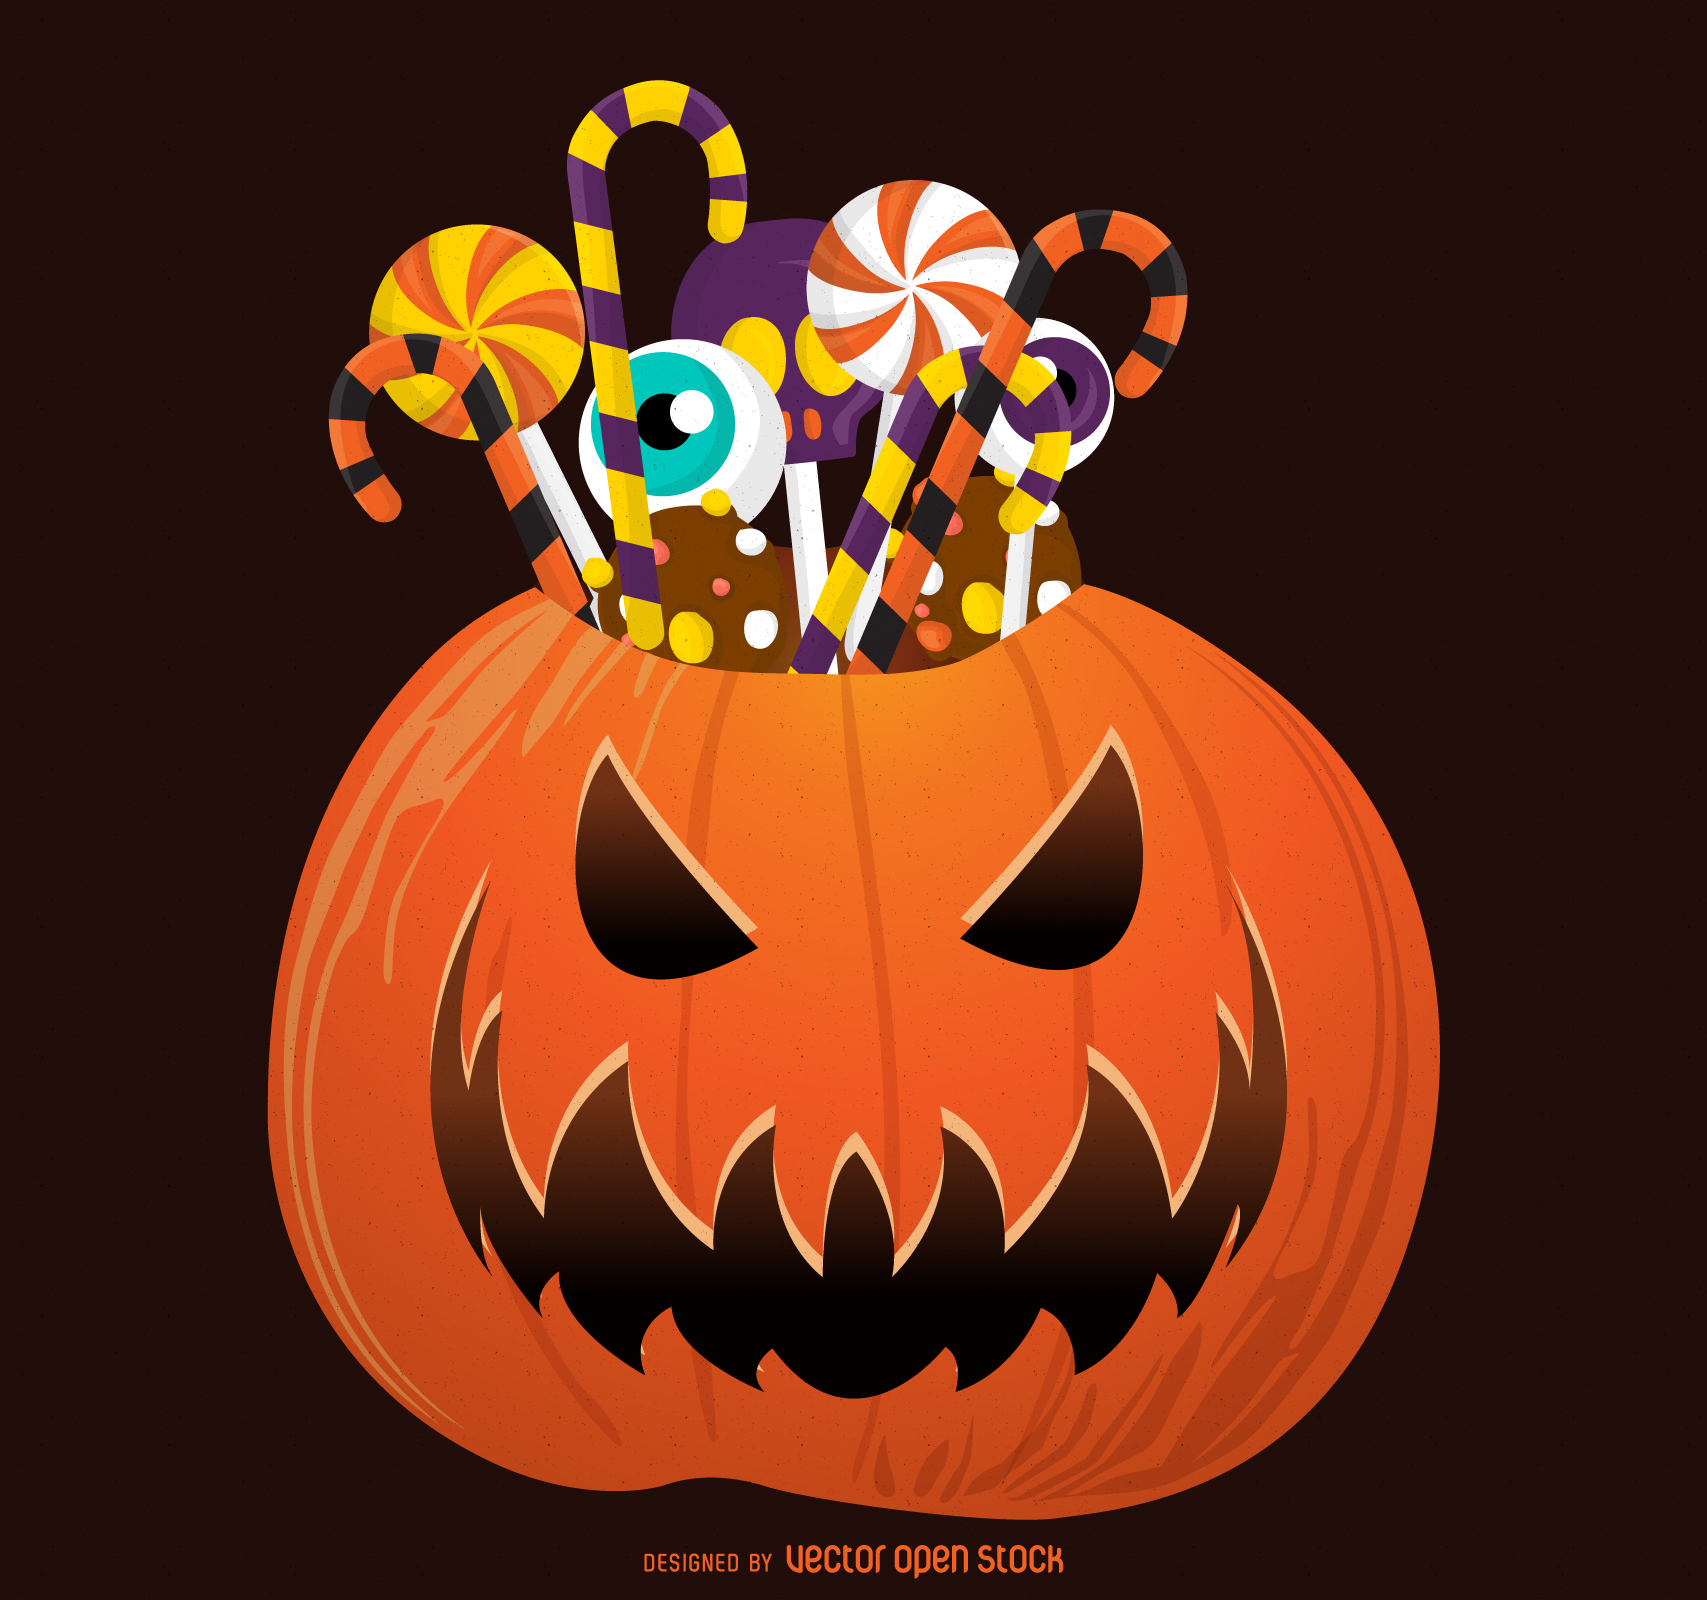 Halloween pumpkin with candy.